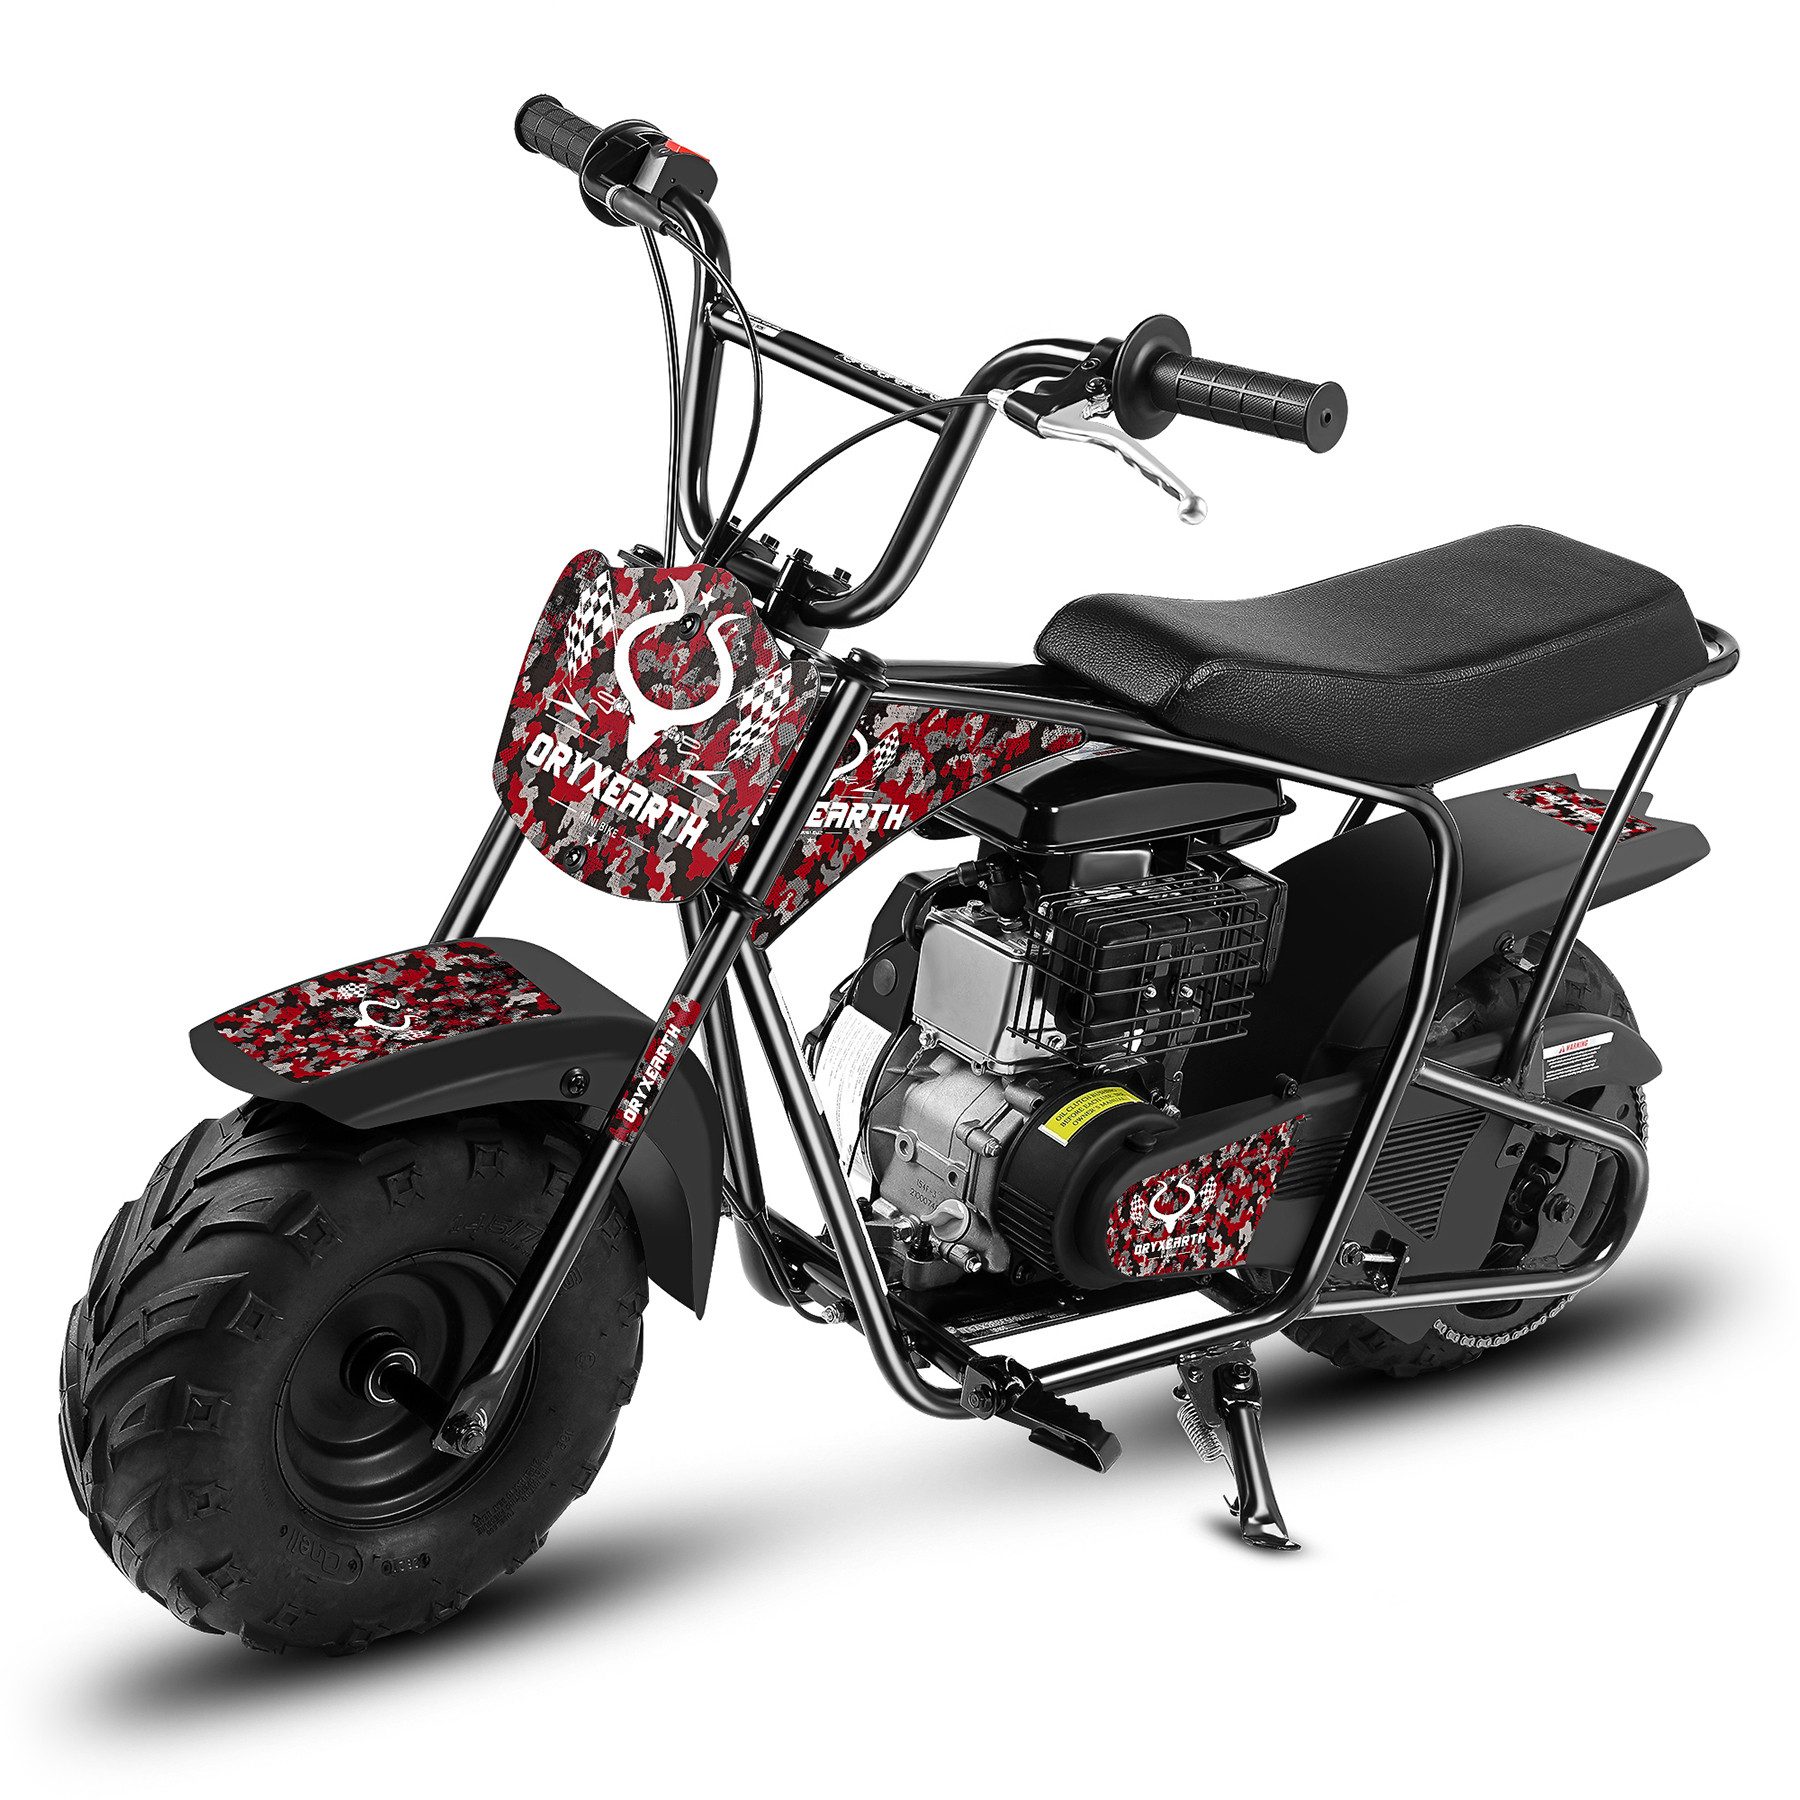 Oryxearth Dirt-Bike Dirt-Bike für Kinder Minicross 105 cc Gasbetriebenes Offroad-Motorrad